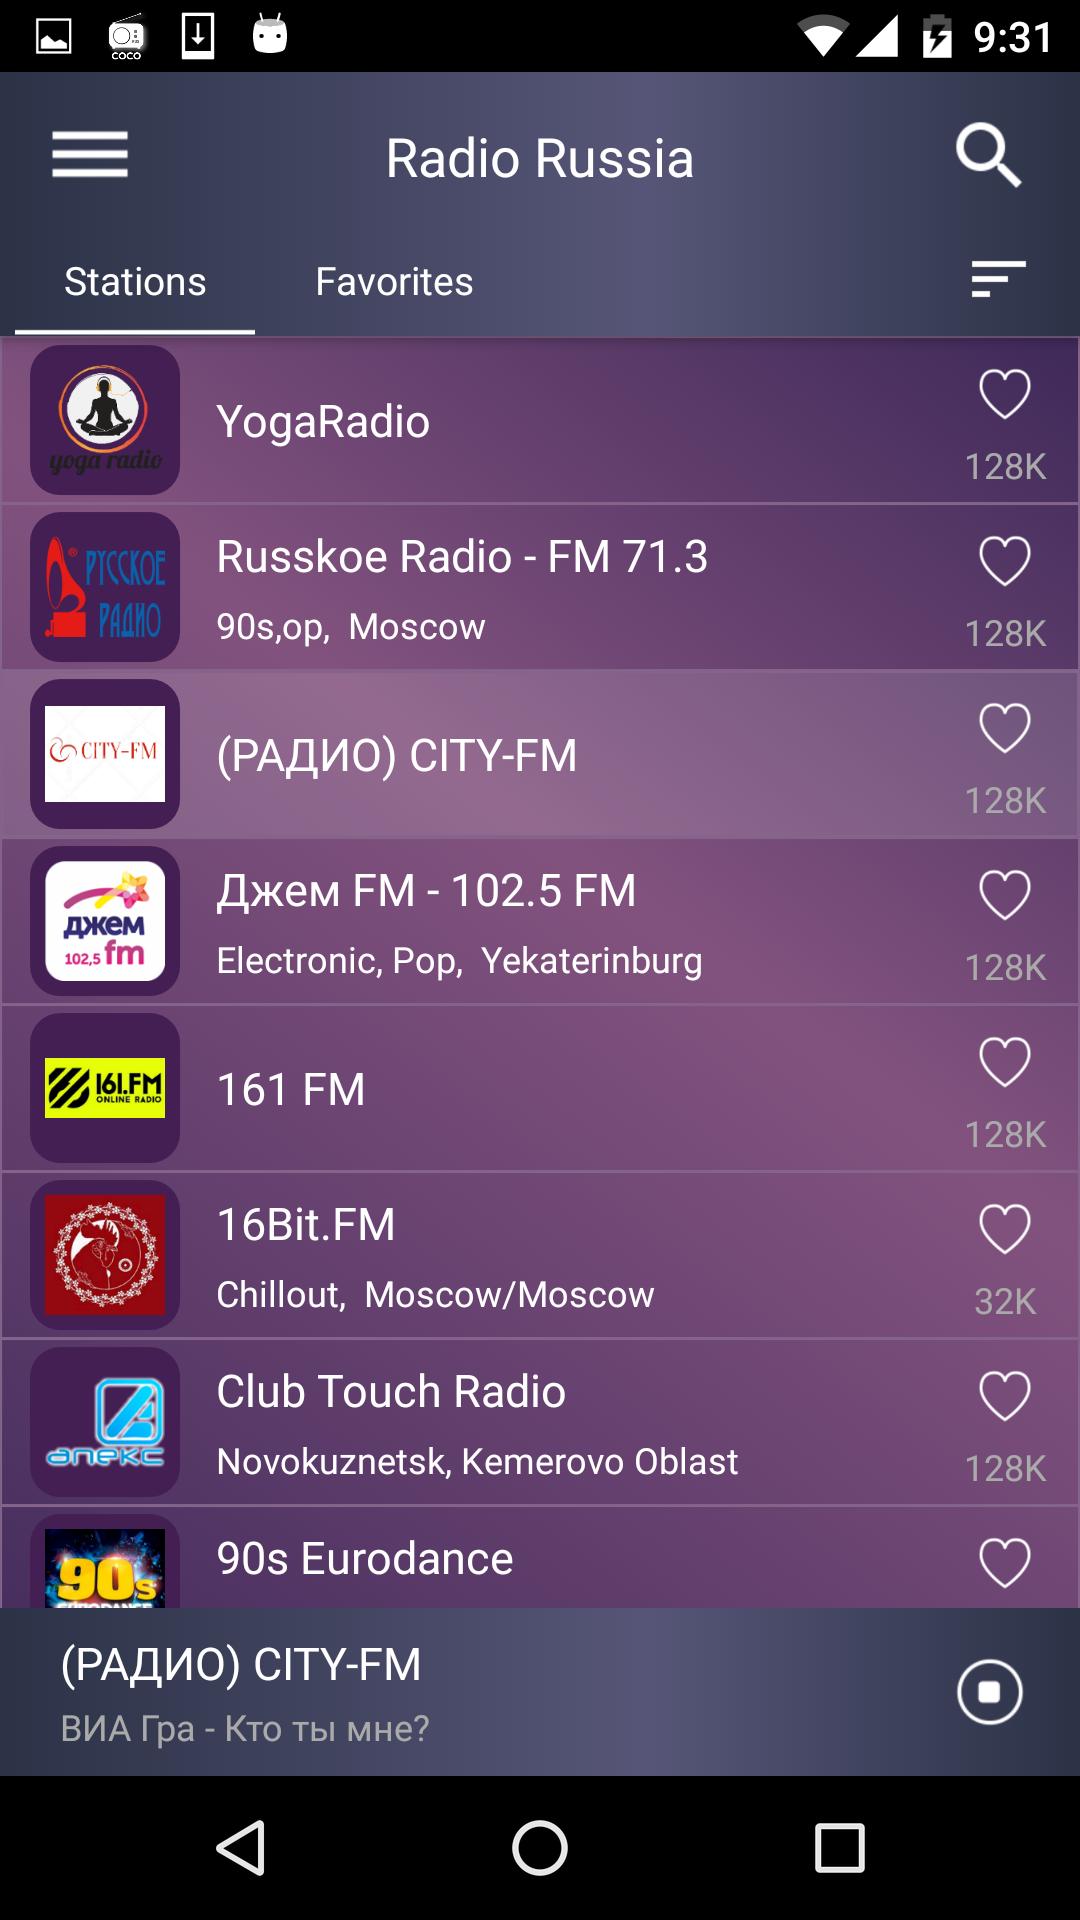 Рашен фм радио. Радио fm. Радио с нормальной музыкой. Радио клуб Москва. 108.0 Радио.